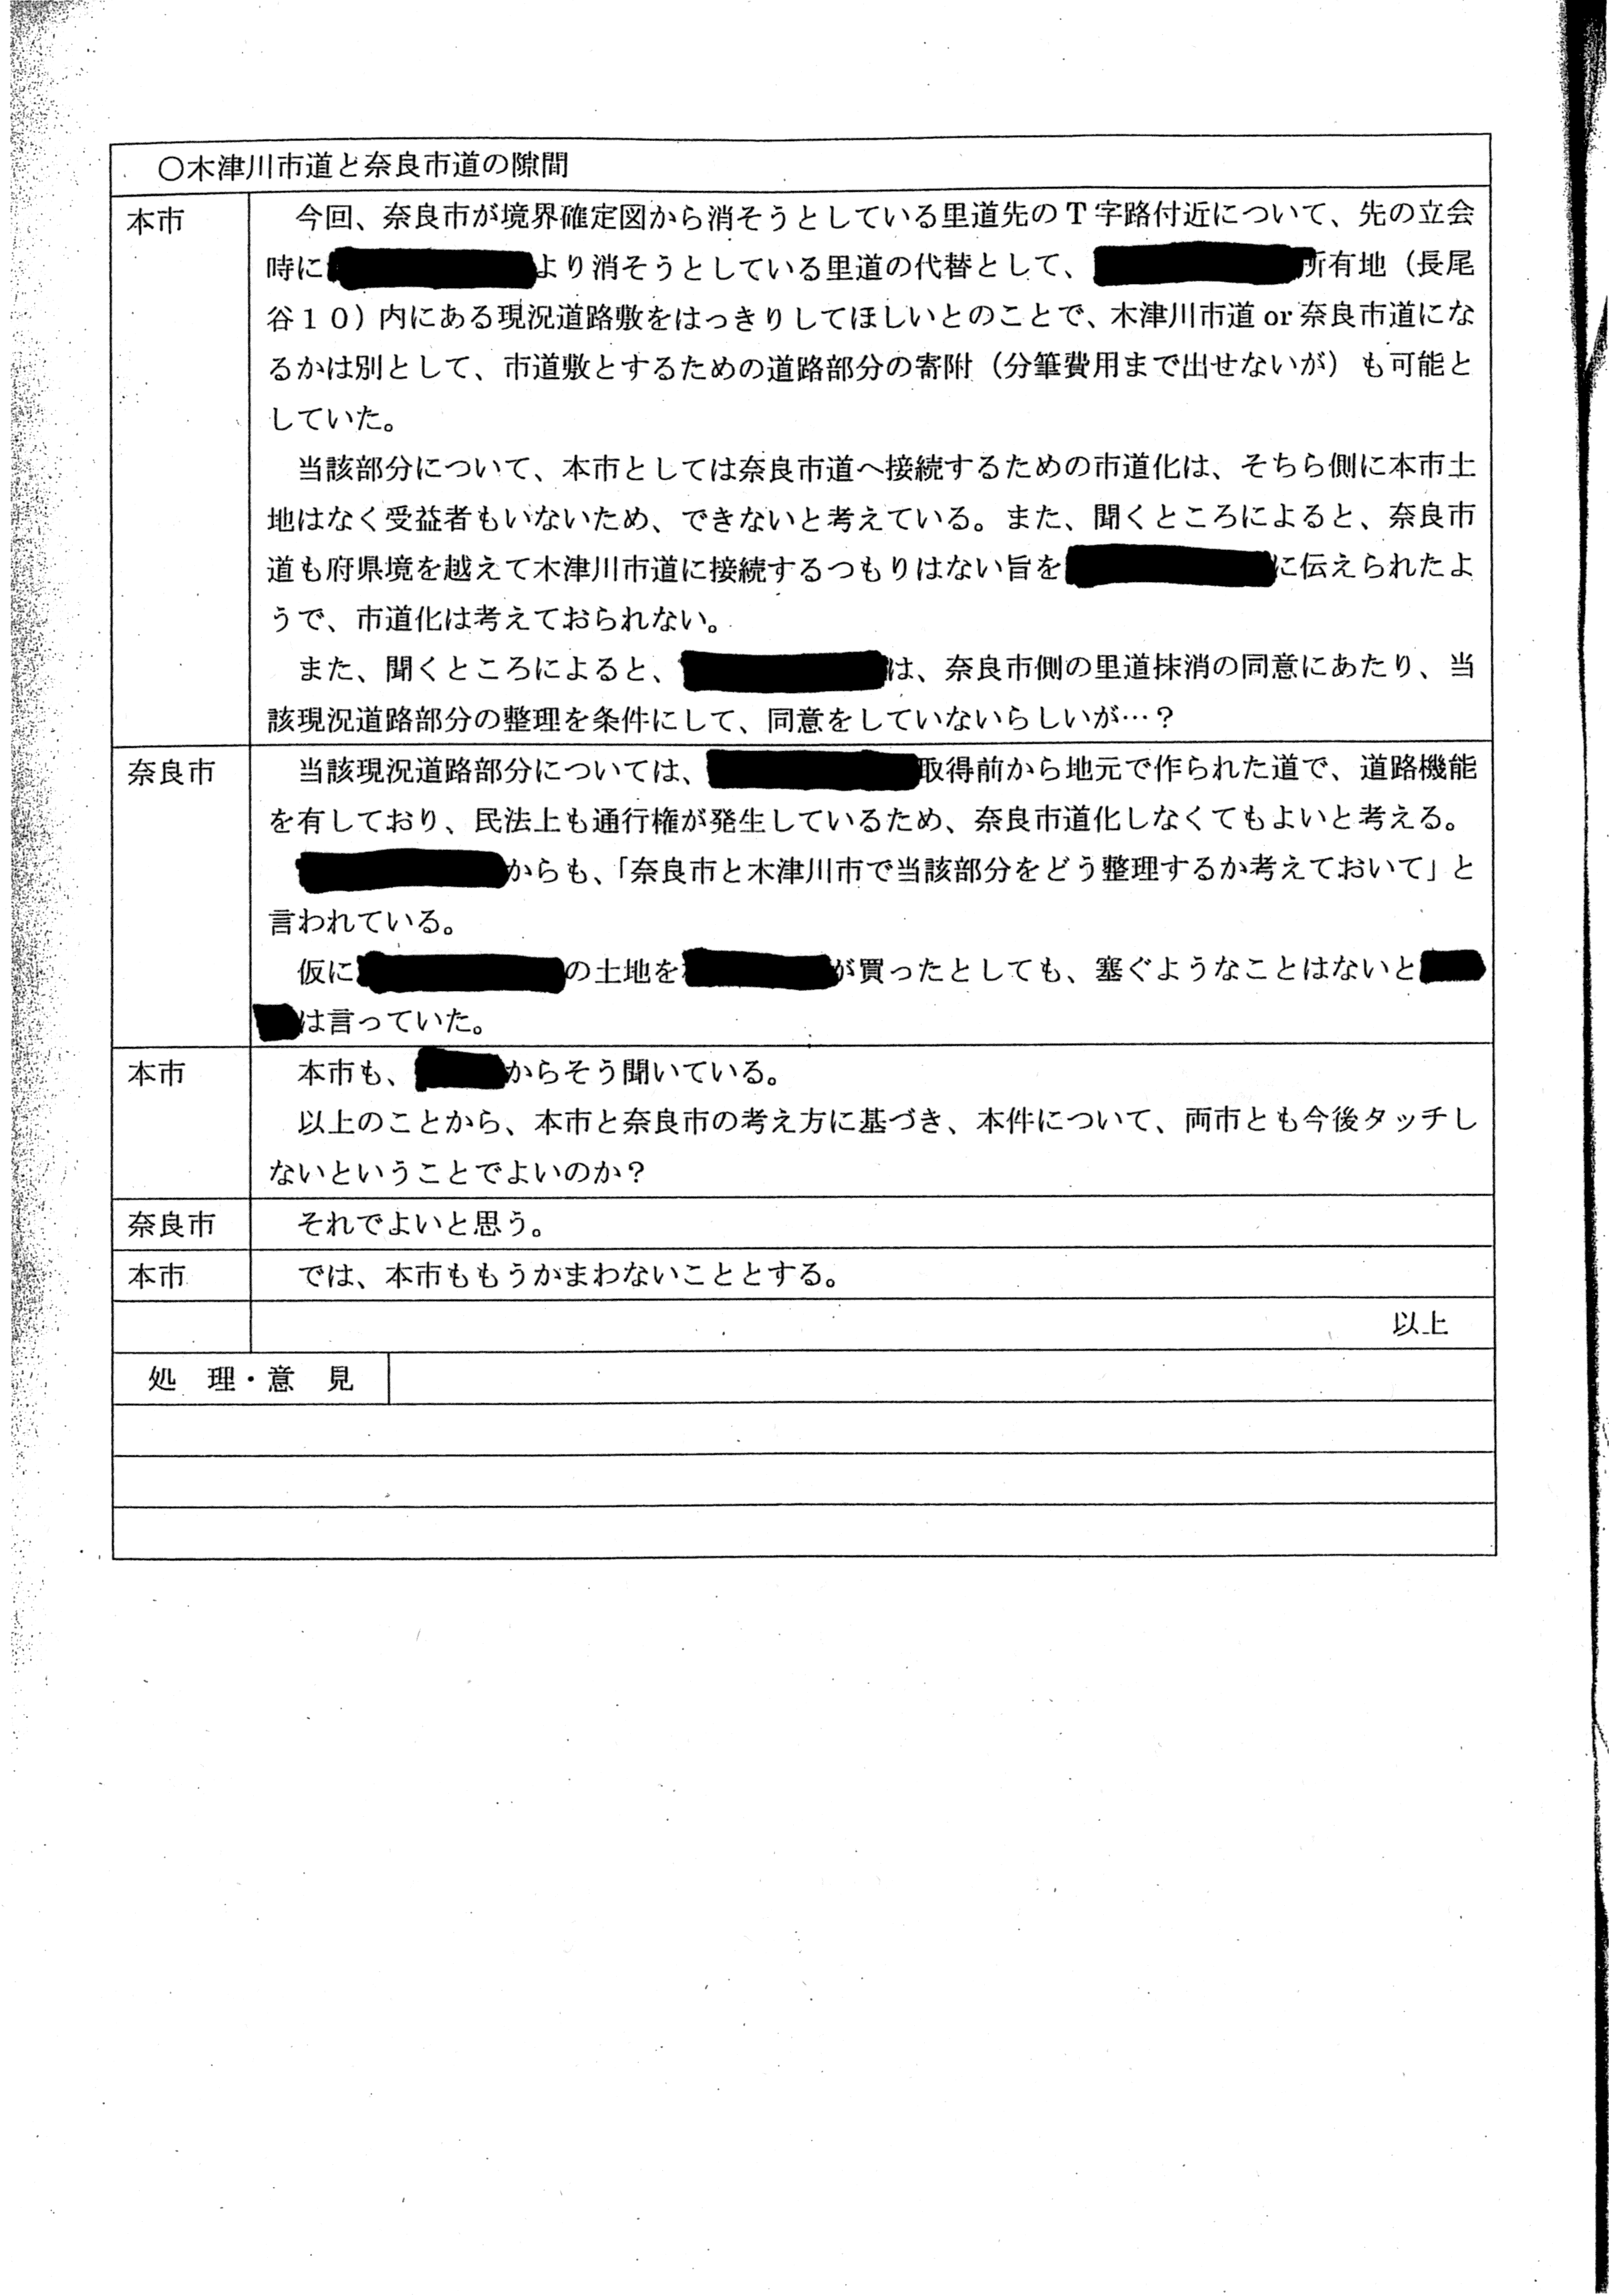 平成30年6月7日の事務事項処理用紙-02